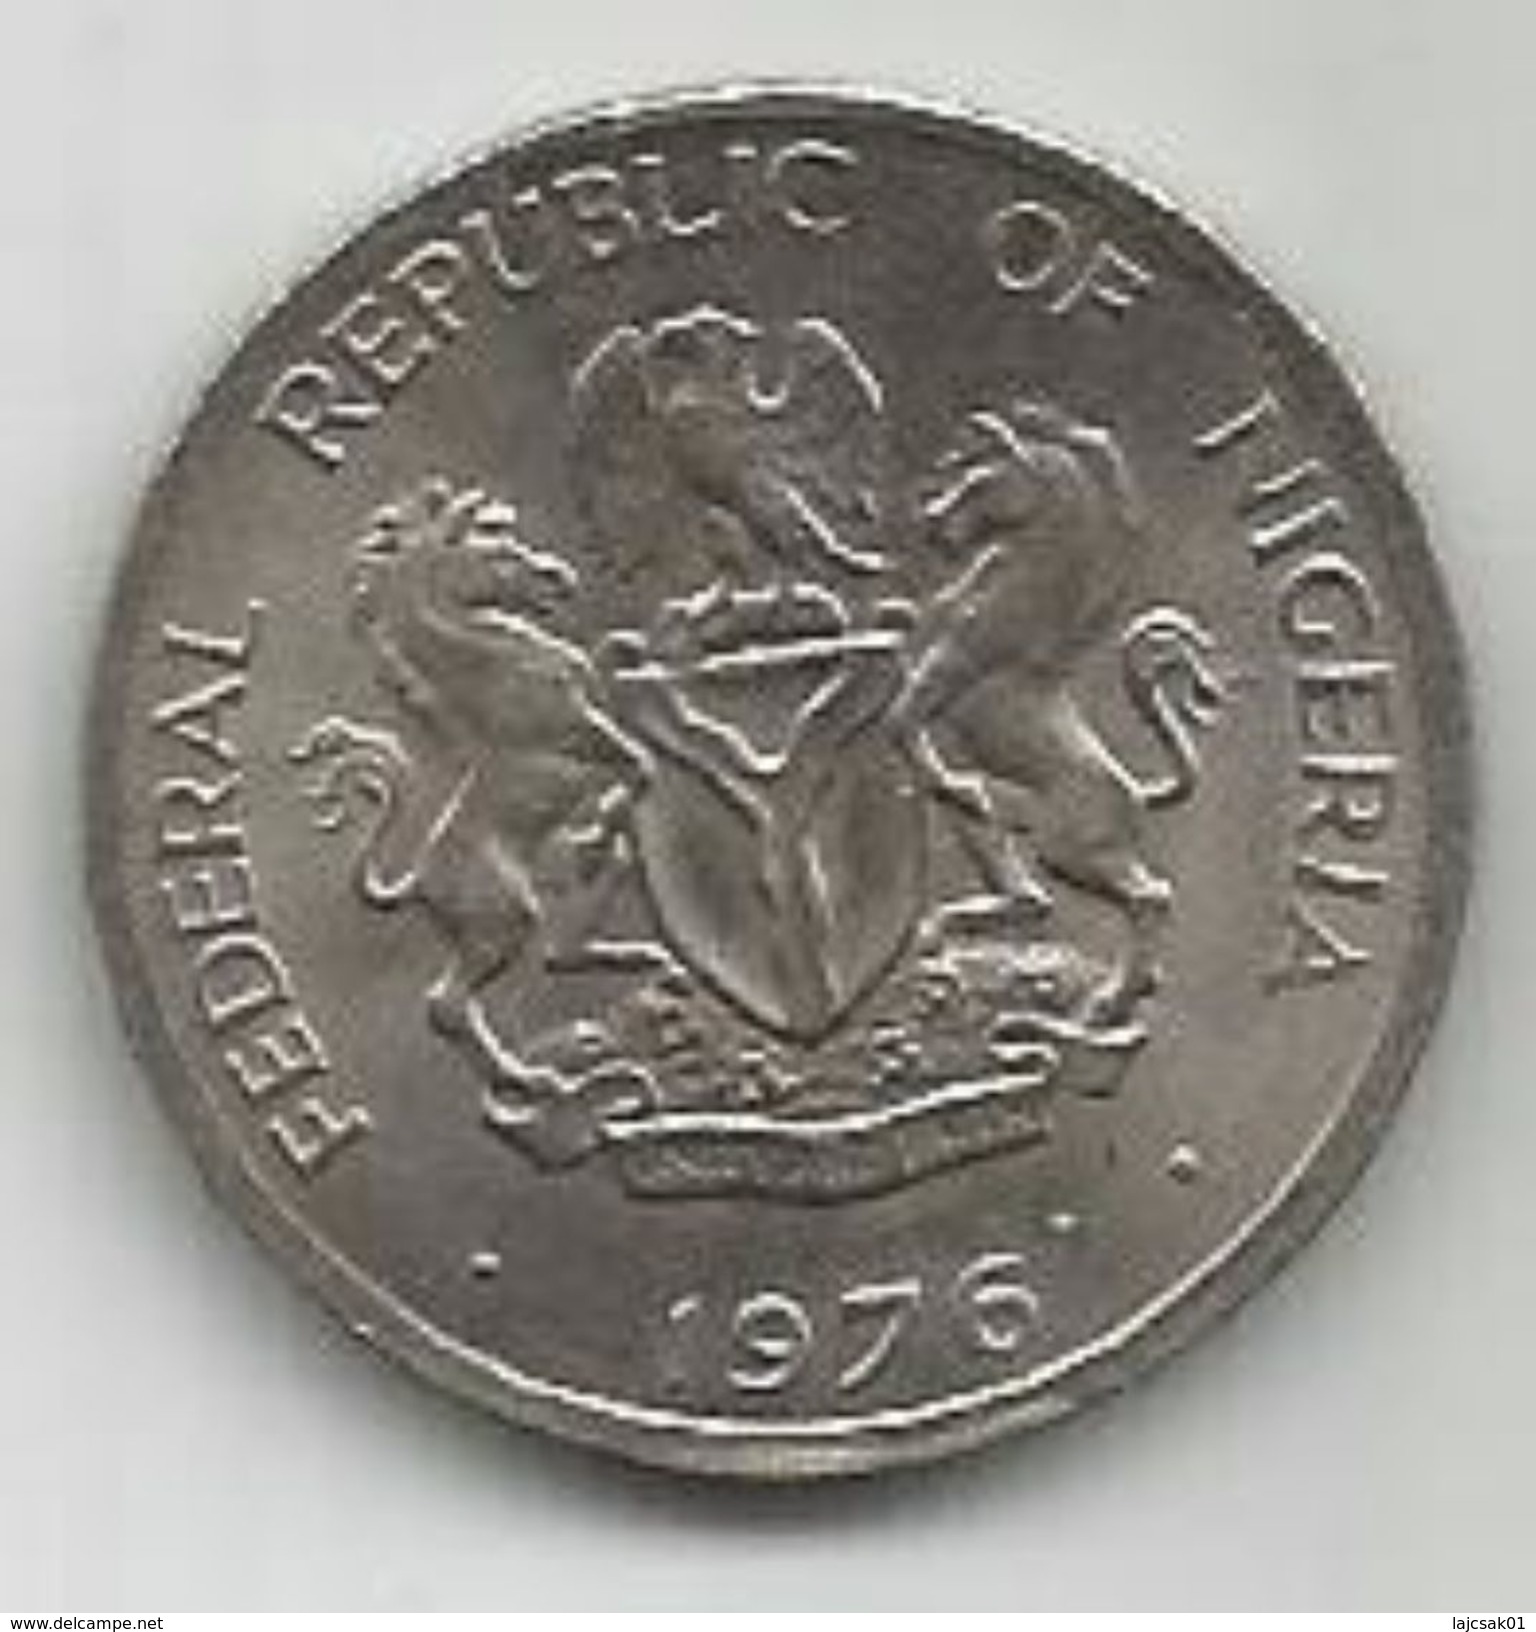 Nigeria 10 Kobo 1976. KM#10.1 - Nigeria